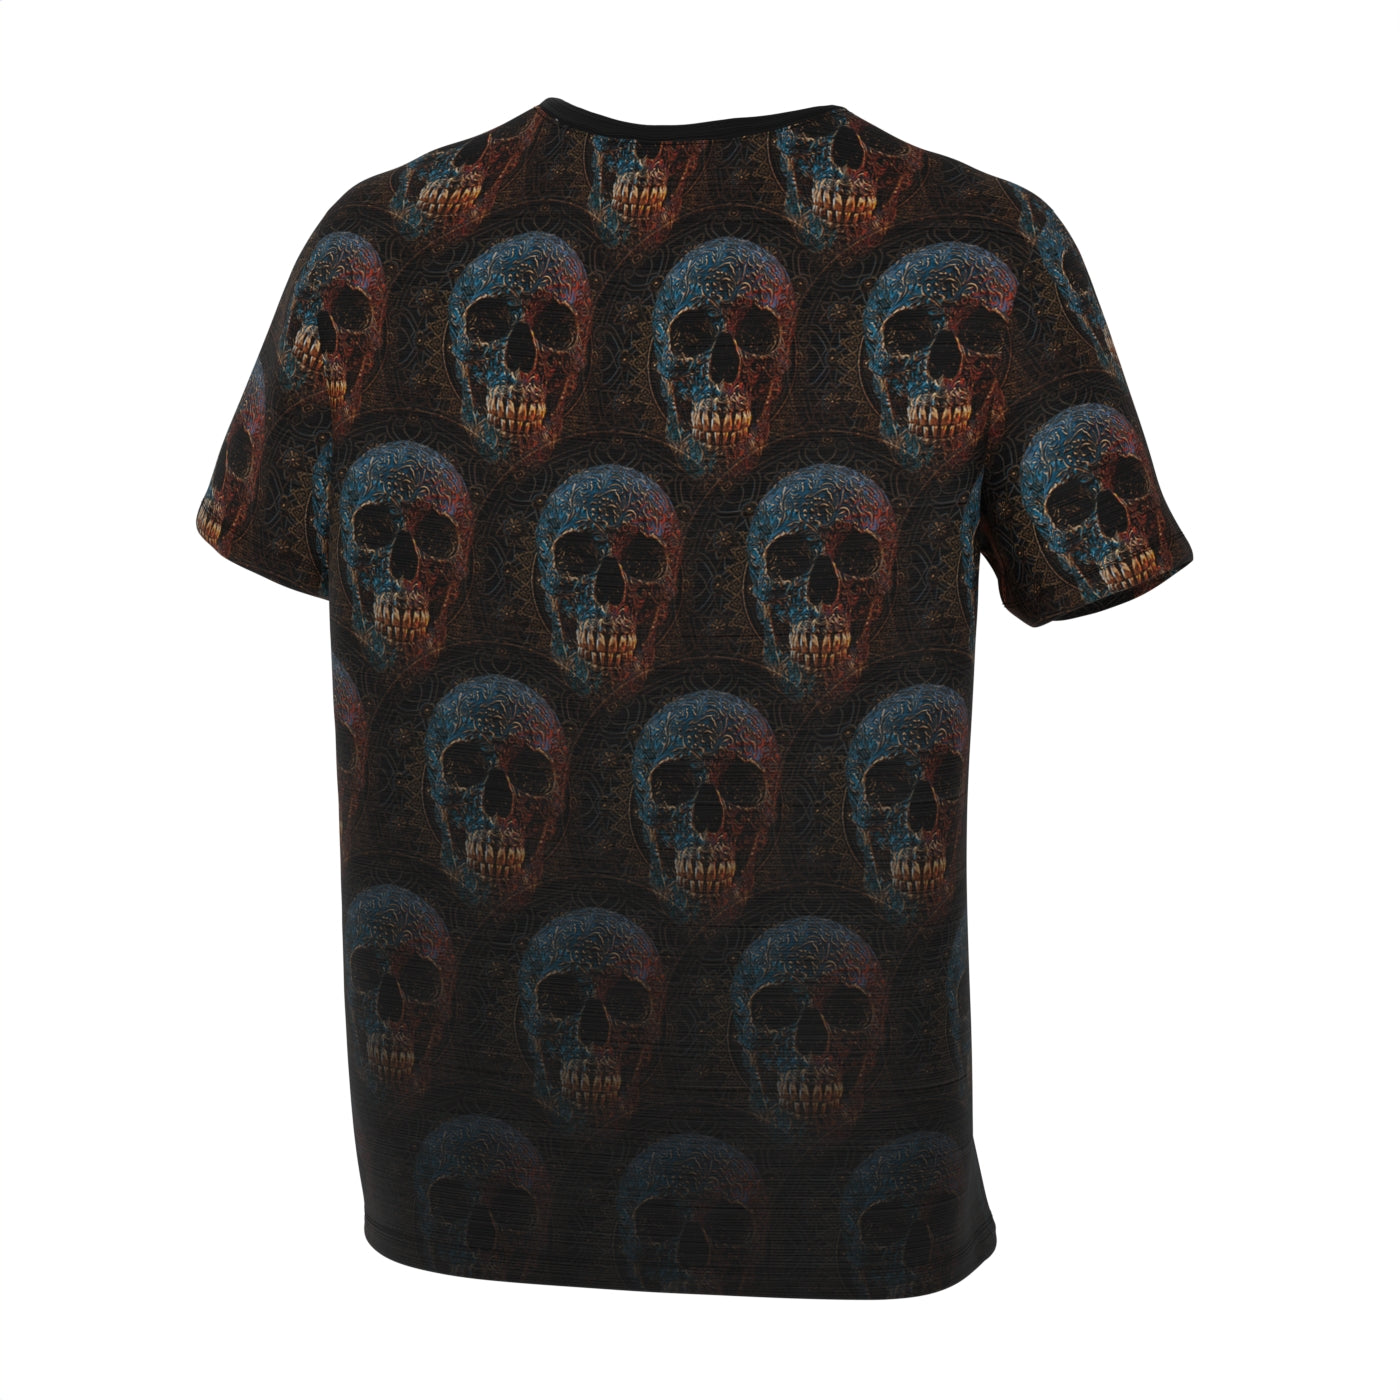 Bronze Skull T-shirt